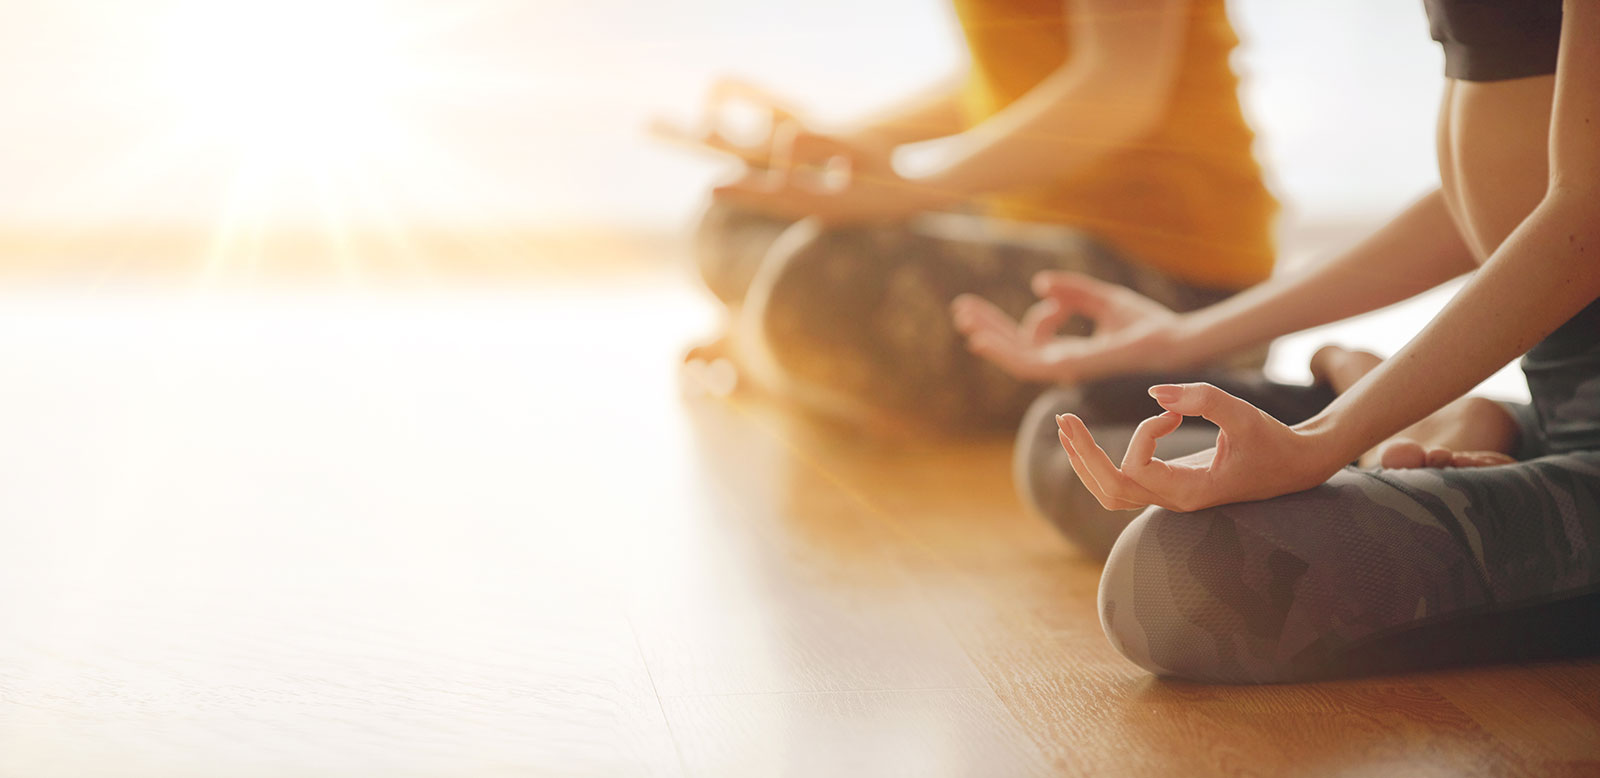 What Should I Expect From A Vinyasa Yoga Class? - Yoga Den